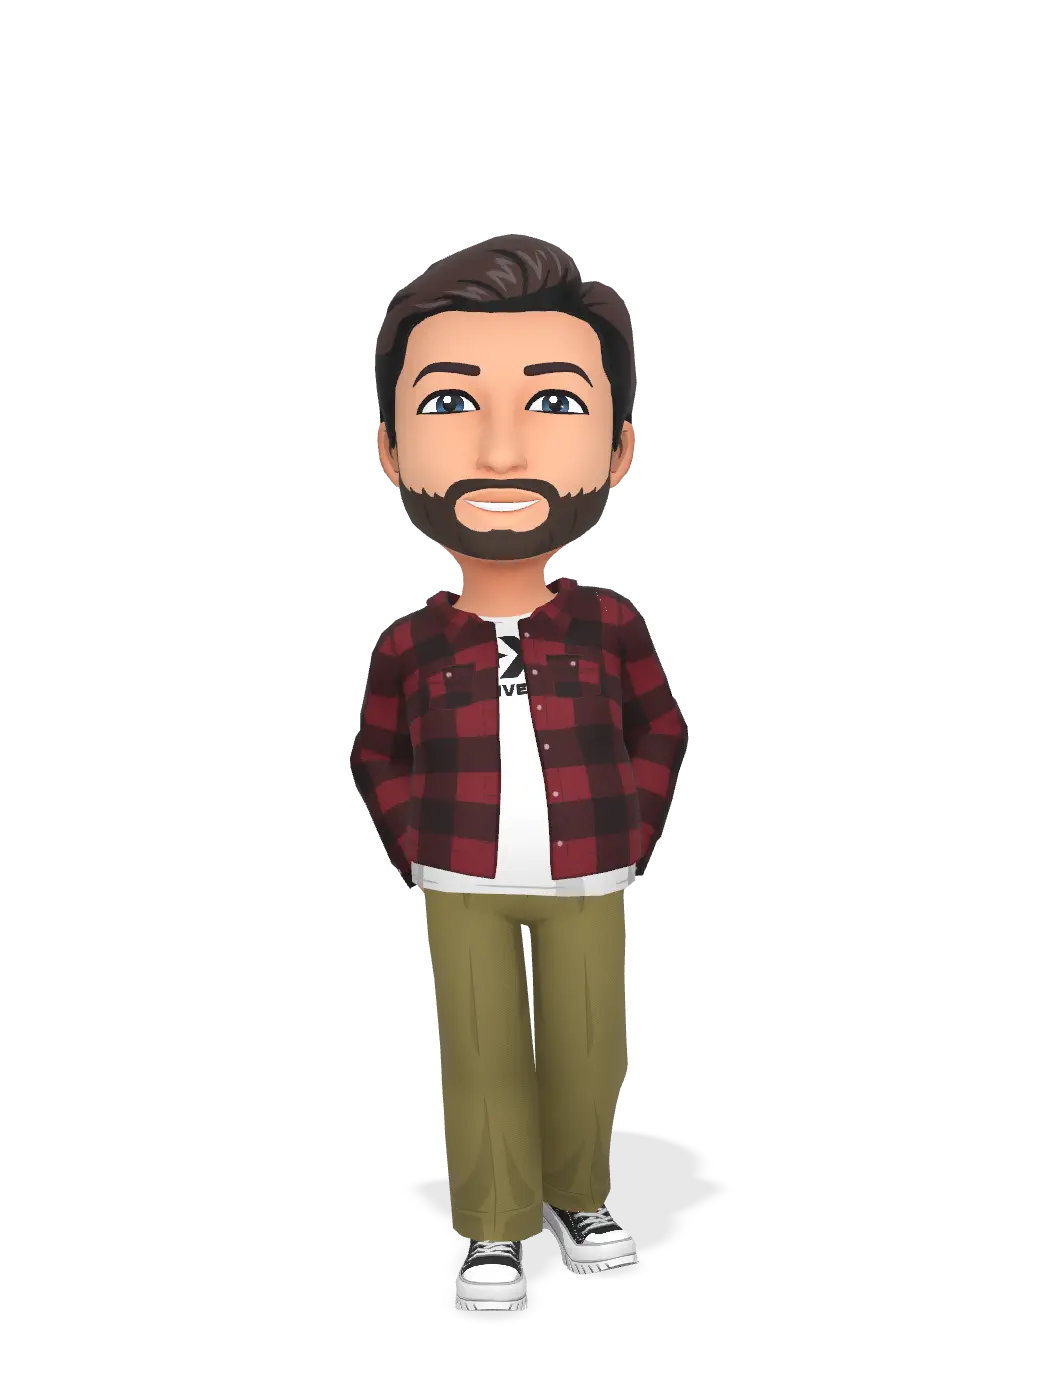 3D Bitmoji for jeromaroo avatar